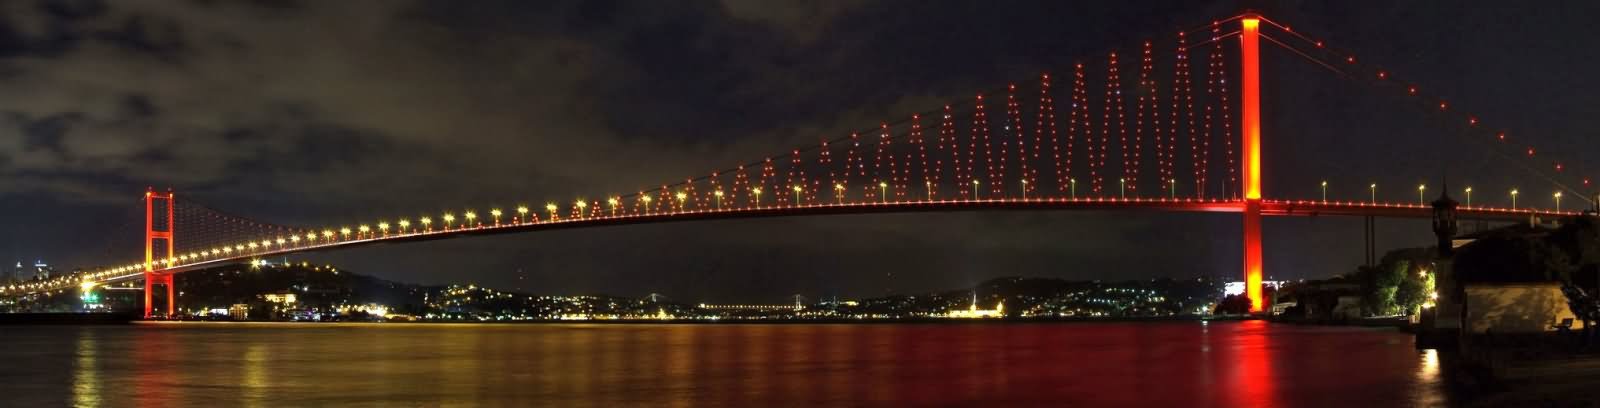 Red Lights On The Bosphorus Bridge At Night